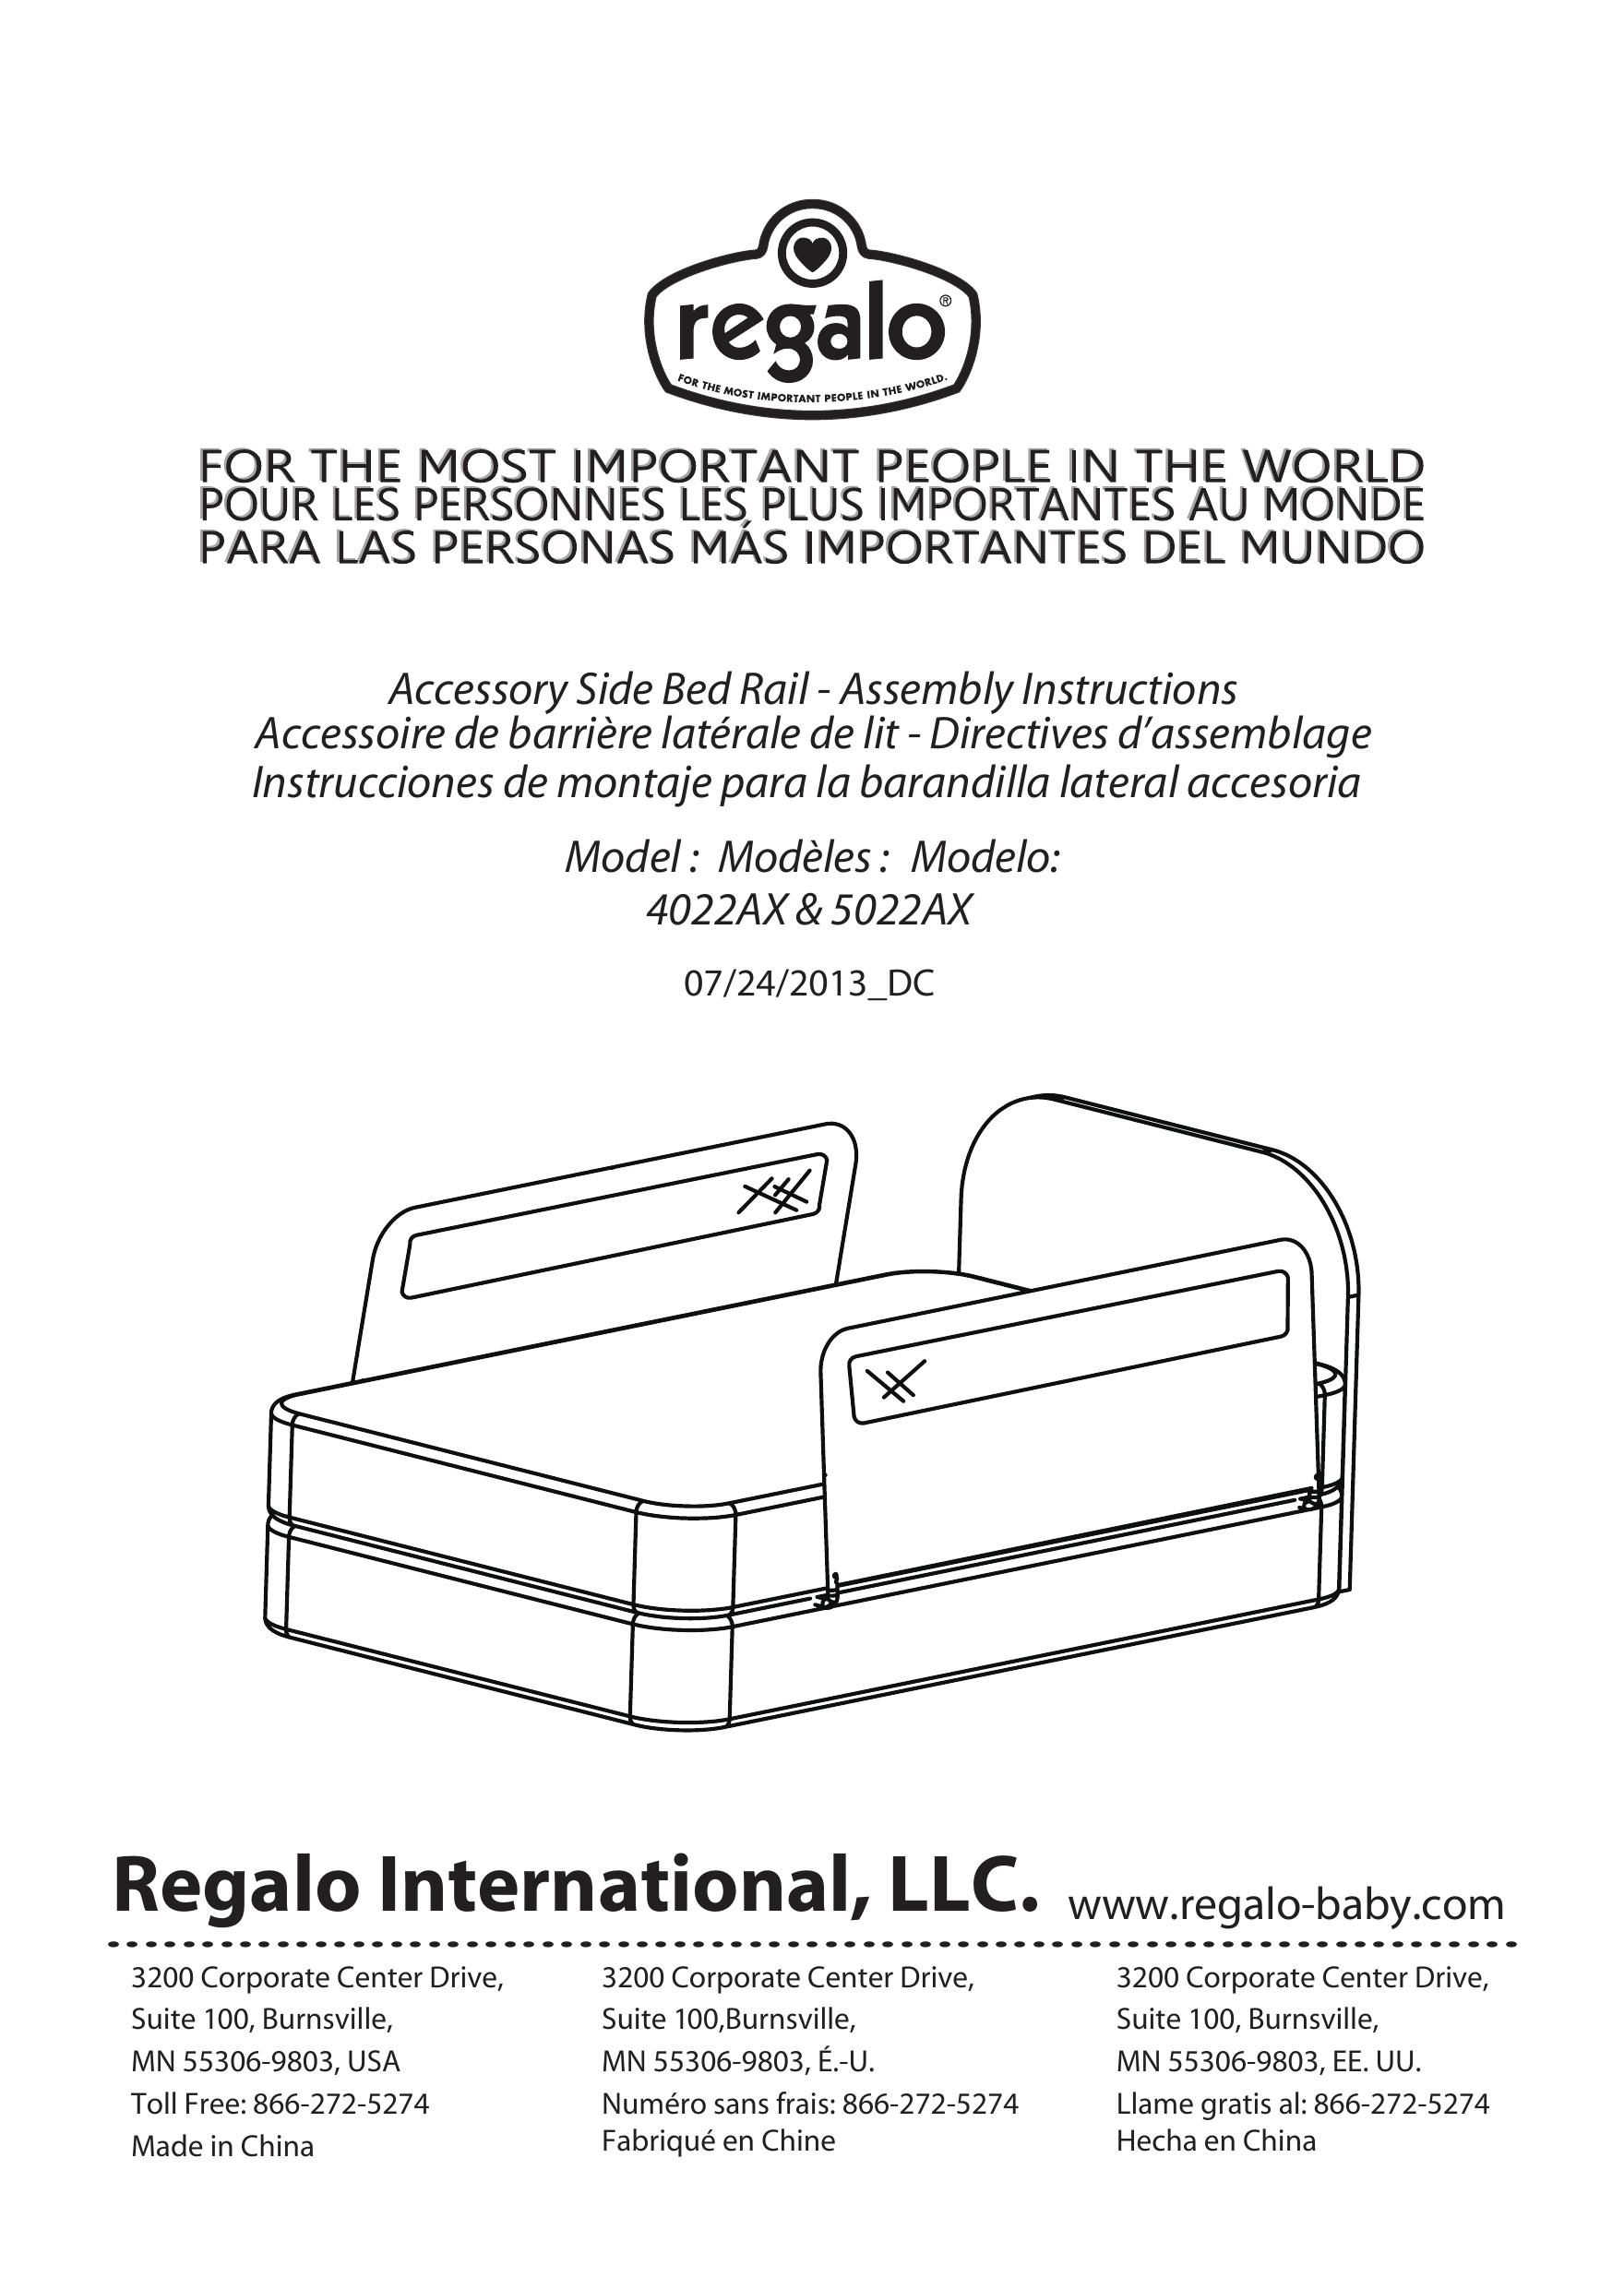 Regalo 4022AX & 5022AX Photo Scanner User Manual